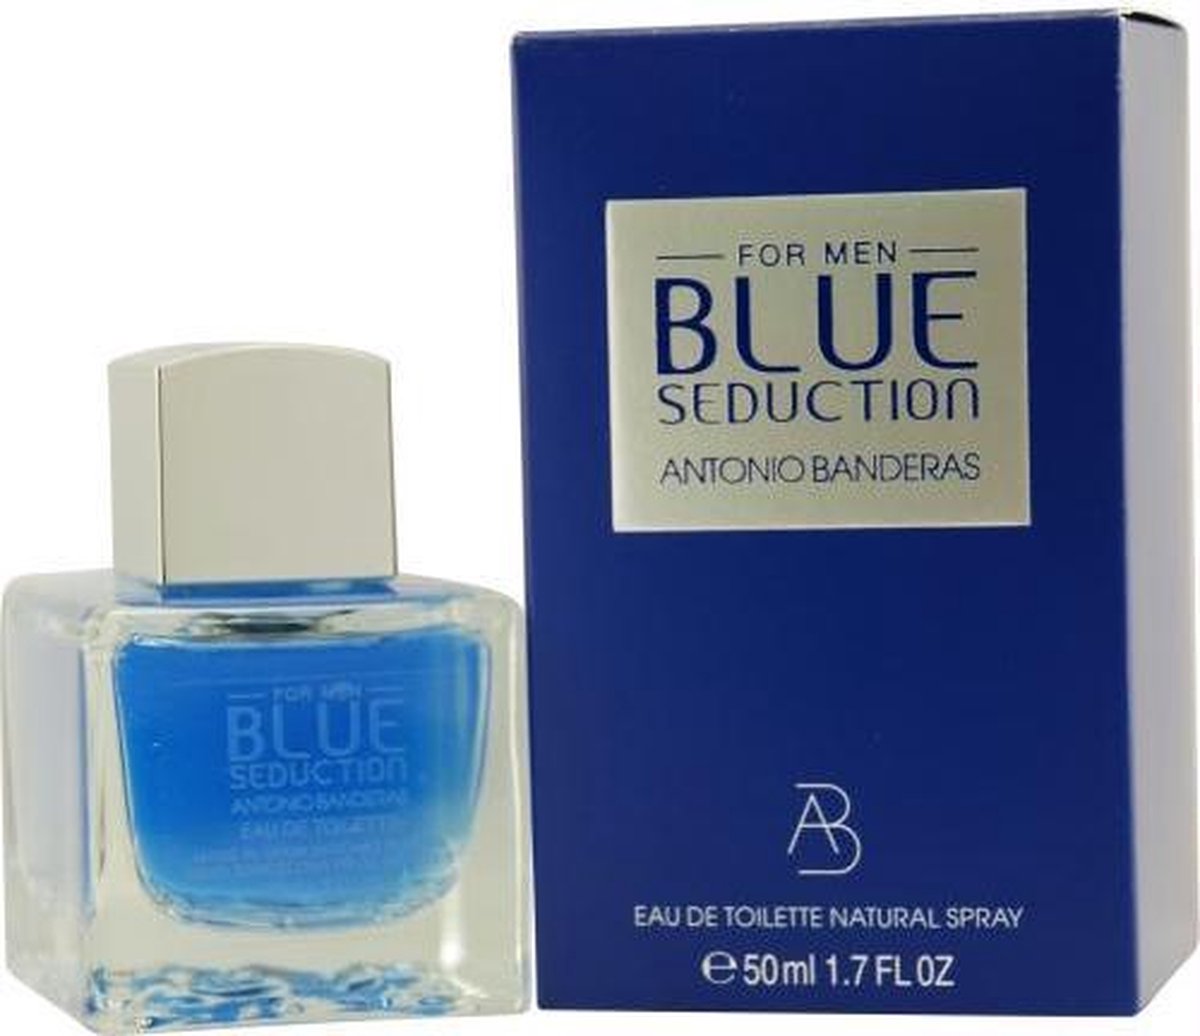 Antonio Banderas Blue Seduction Eau de Toilette 50ml Spray